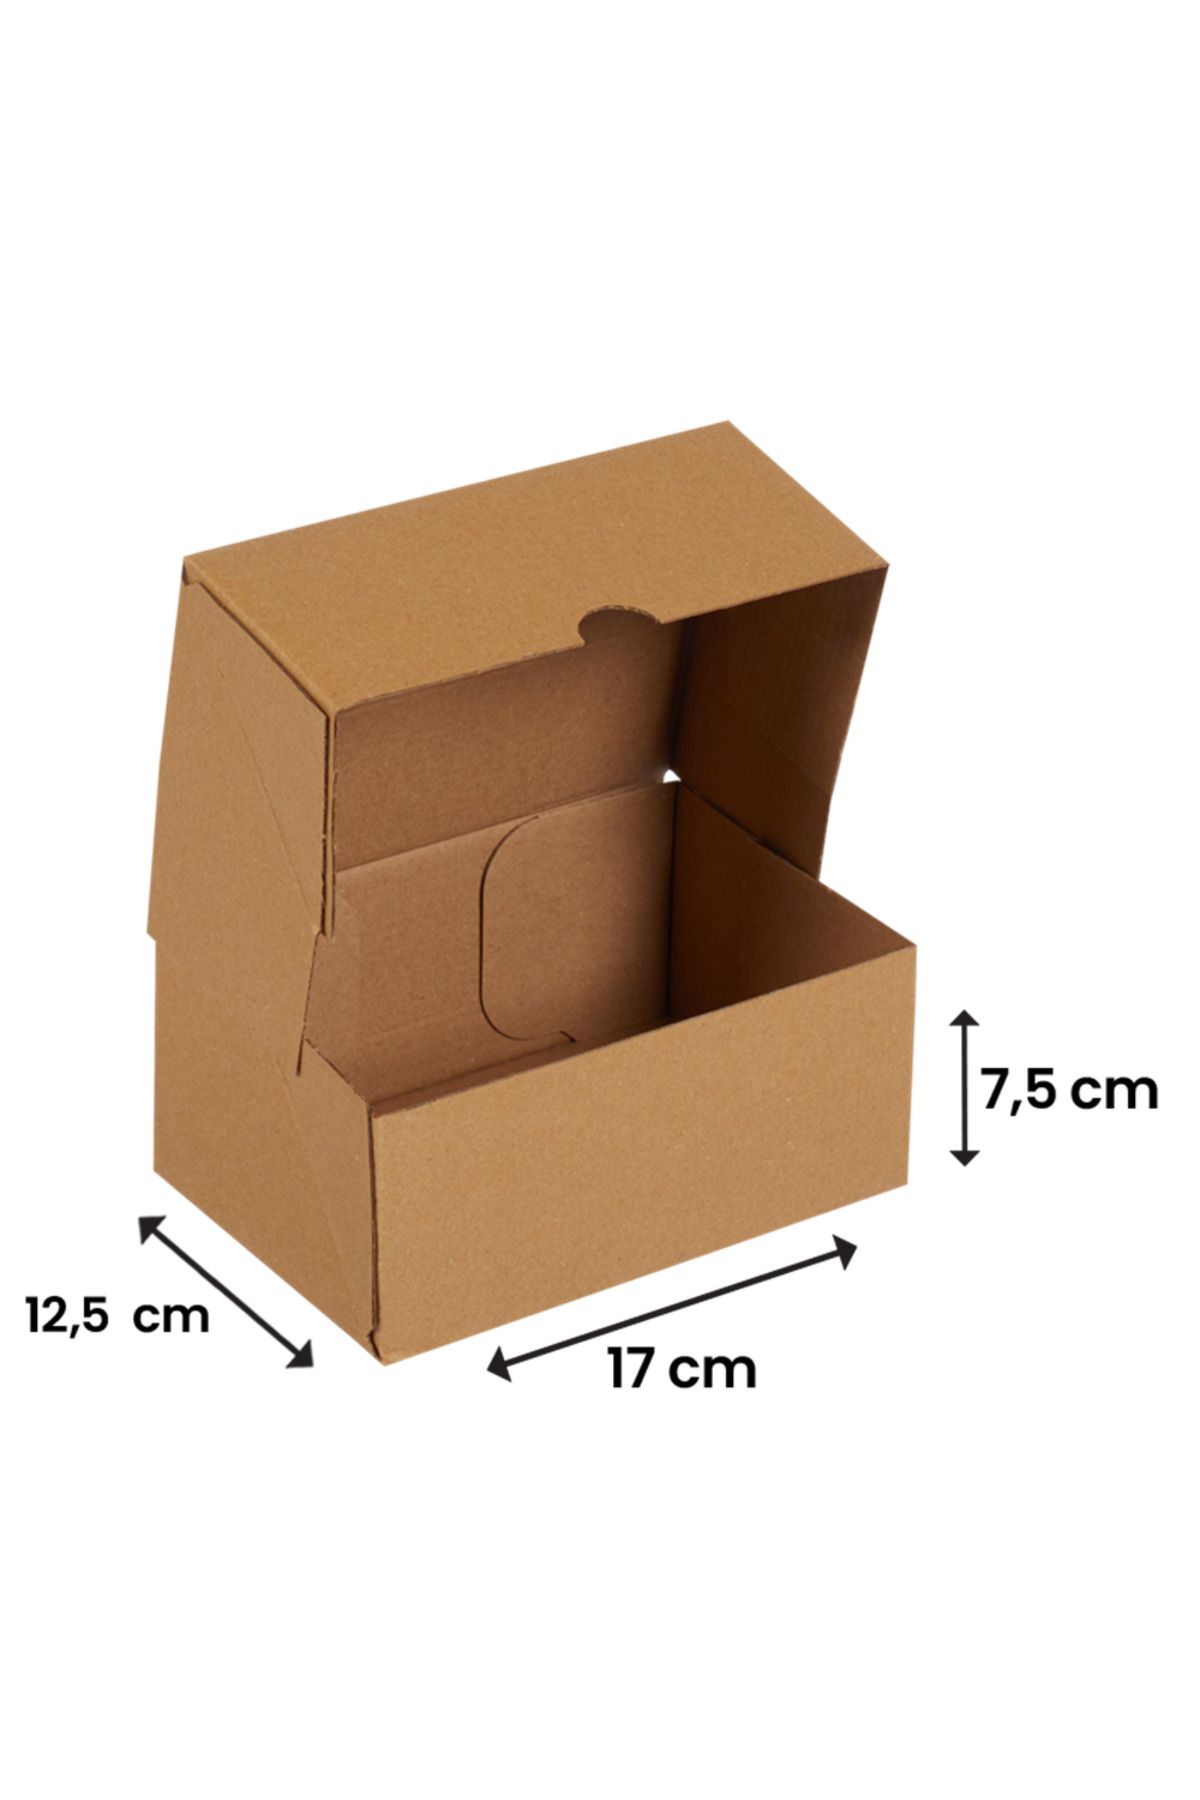 Packanya 17x12,5x7,5-25 Adet Kesimli Karton Kutusu - Internet Ve Kargo Kutusu